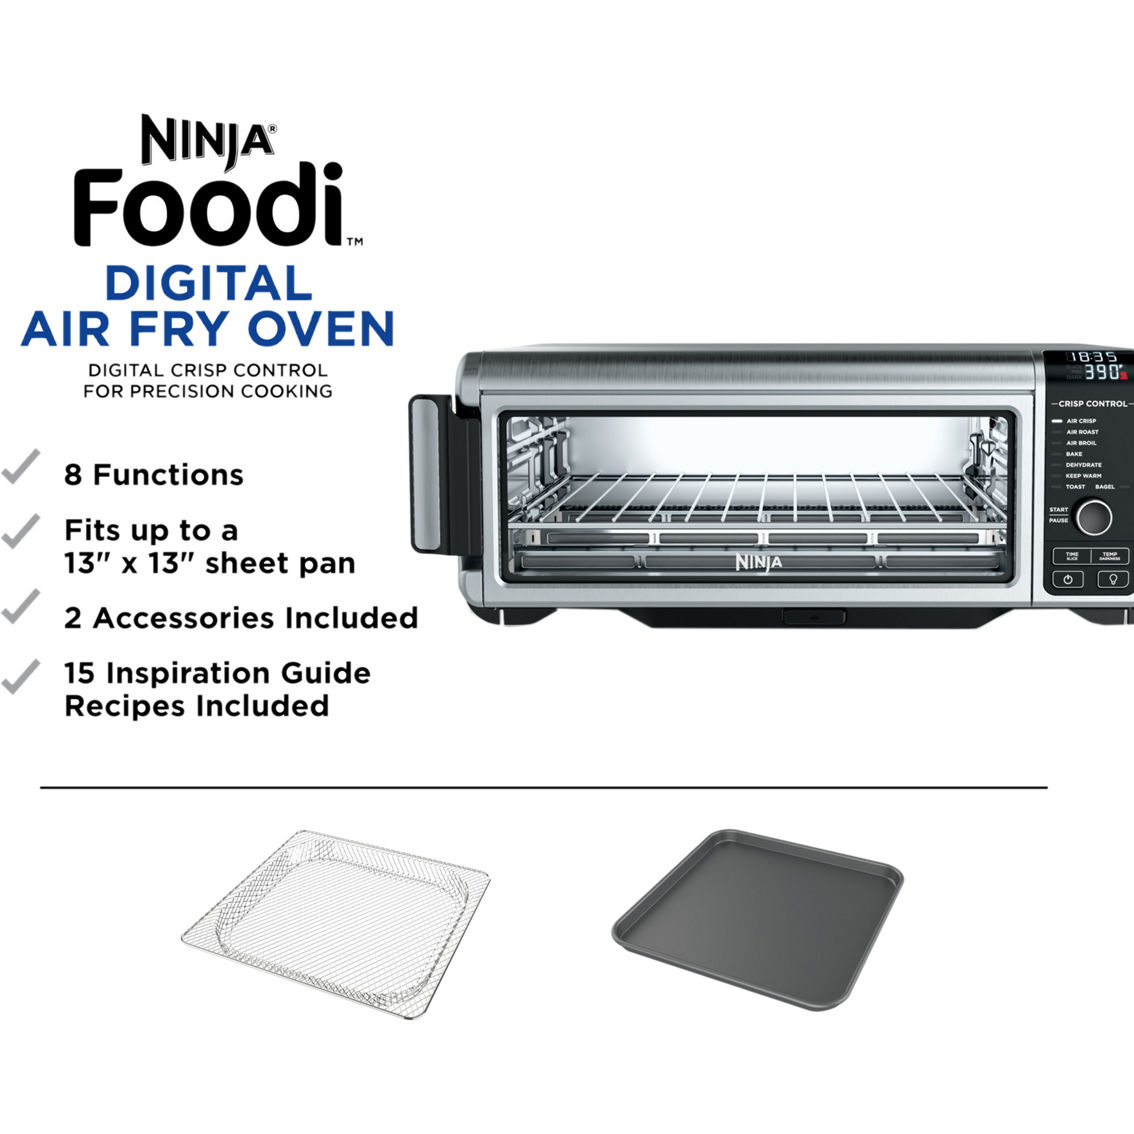 The Ninja Foodi Digital Air Fry Oven - Image 6 of 10